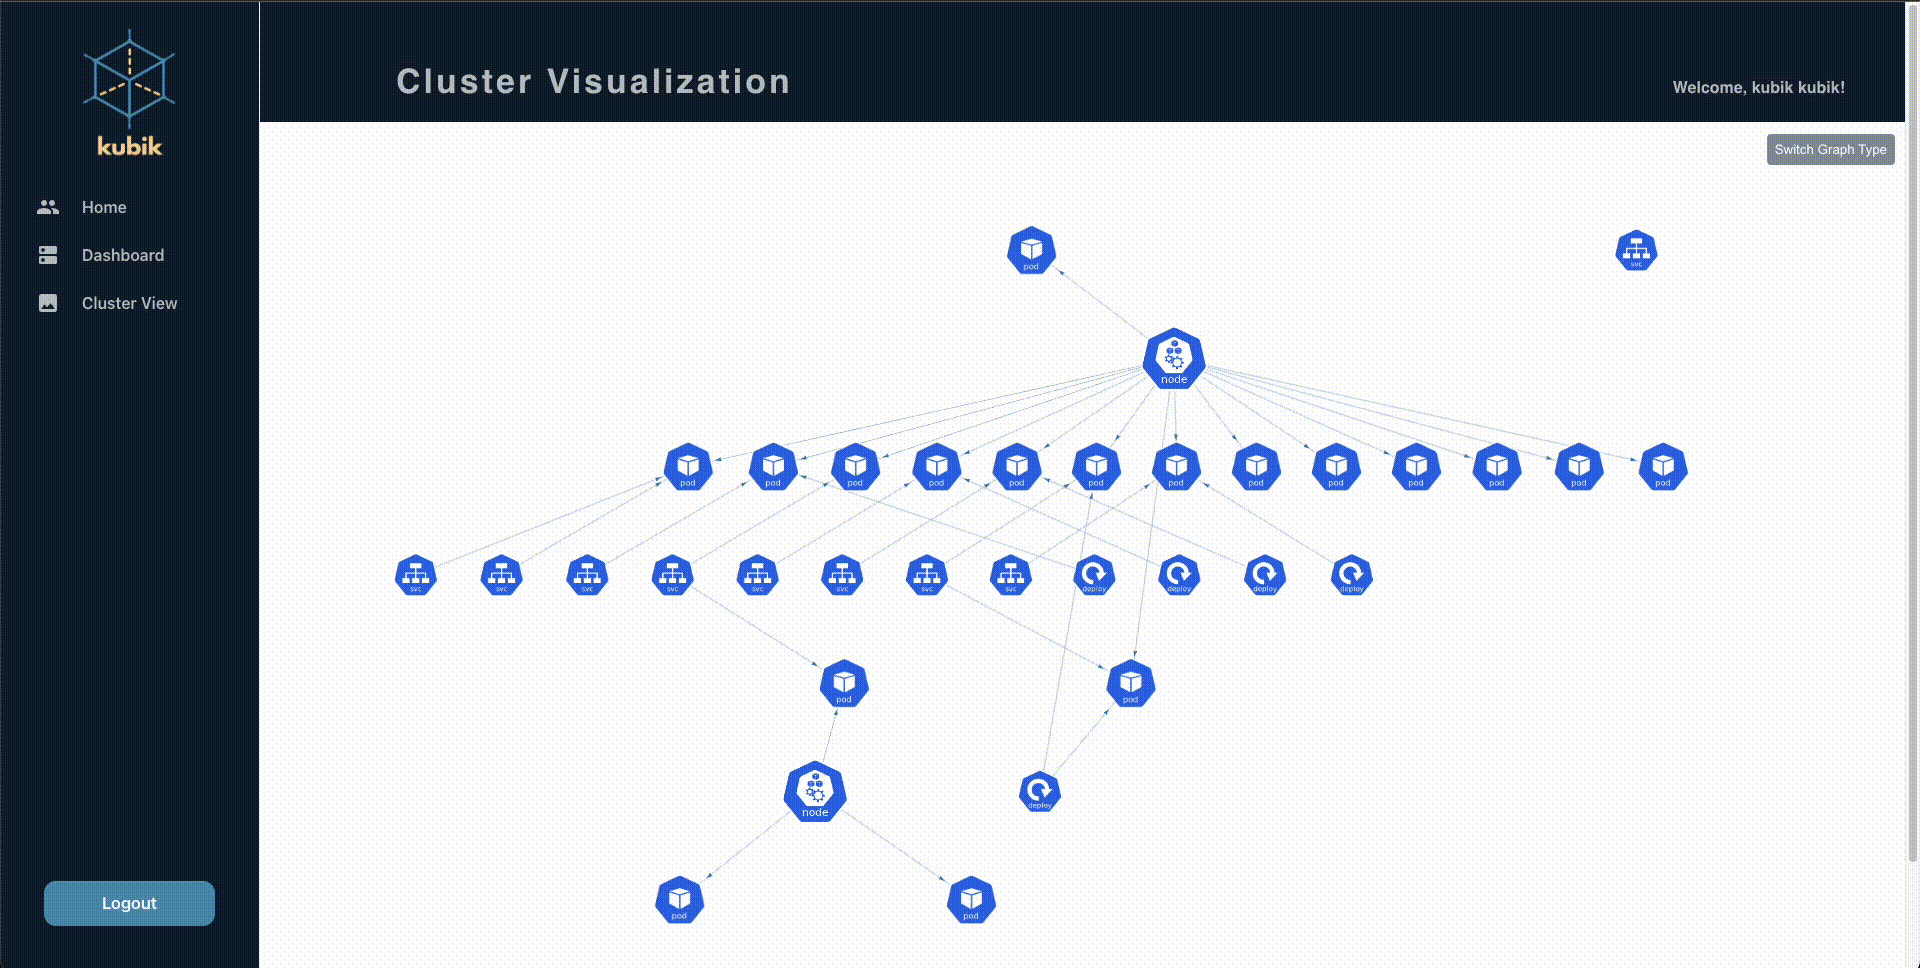 Cluster Visualization